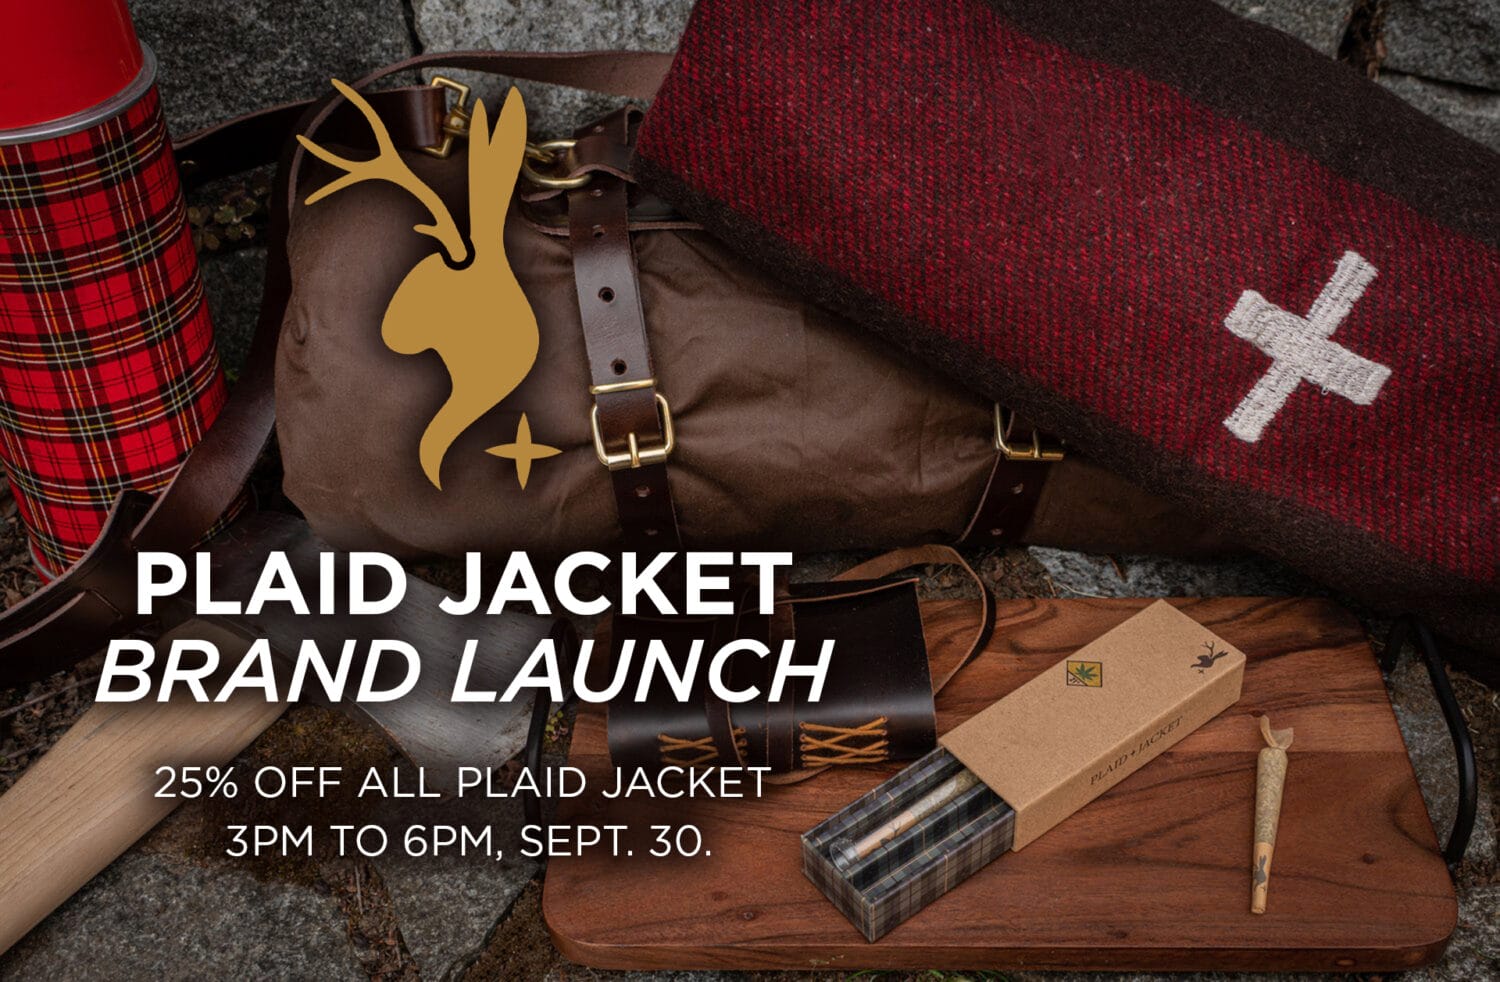 Plaid Jacket Brand Launch